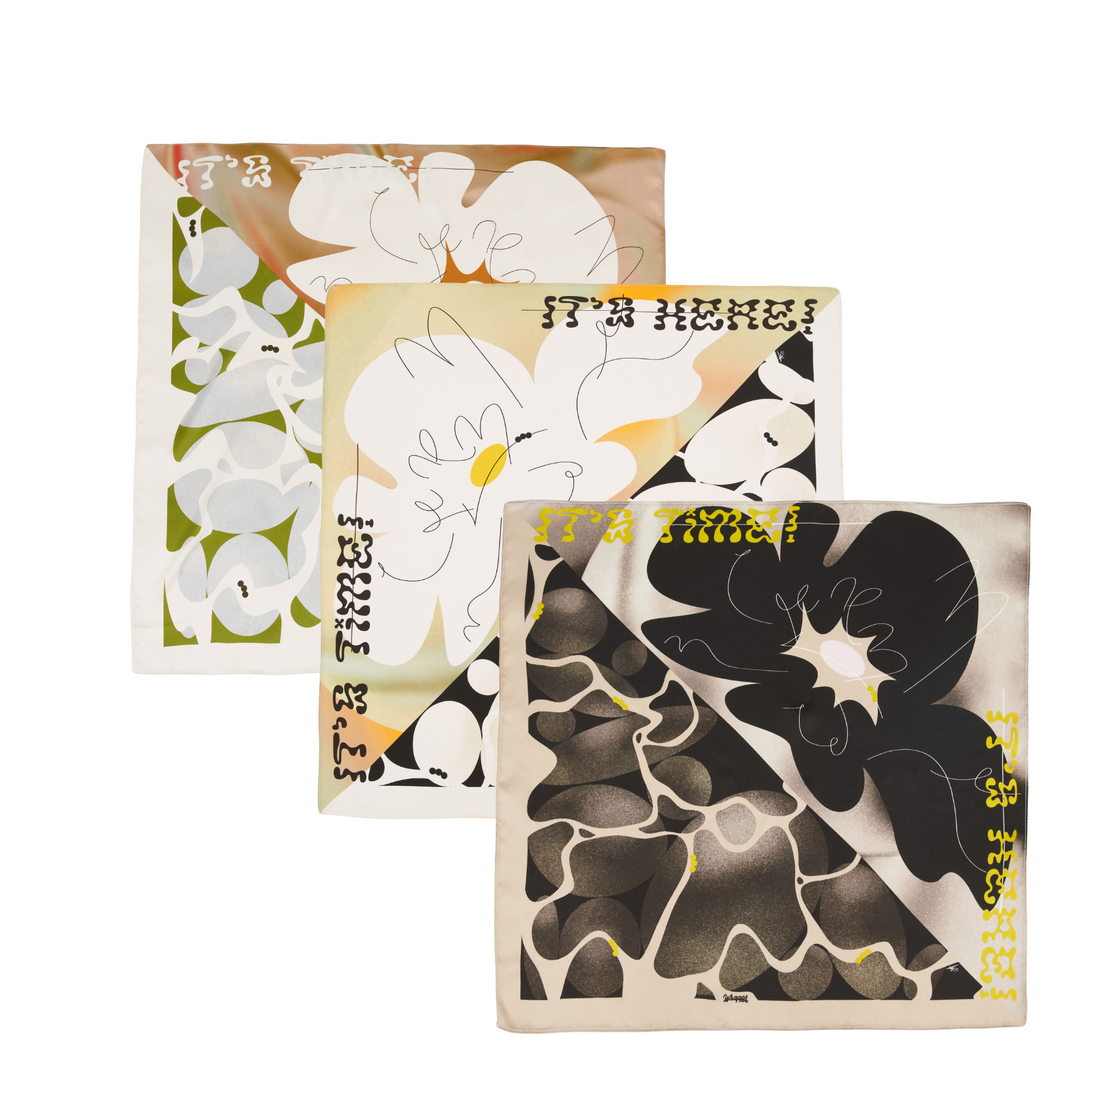 Le Gasp Collection Bundle | 3 Furoshiki Wraps